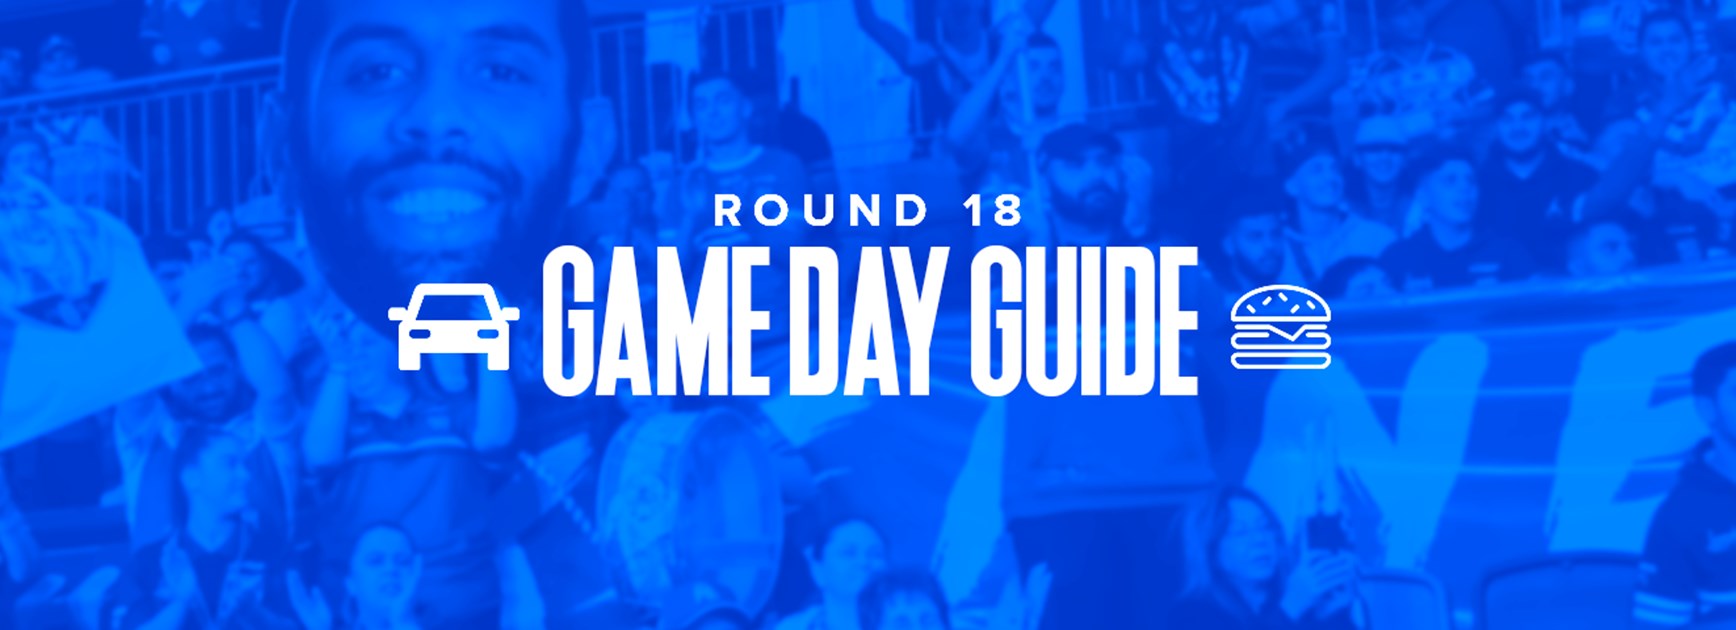 Game Day Guide: Round 18 v Rabbitohs